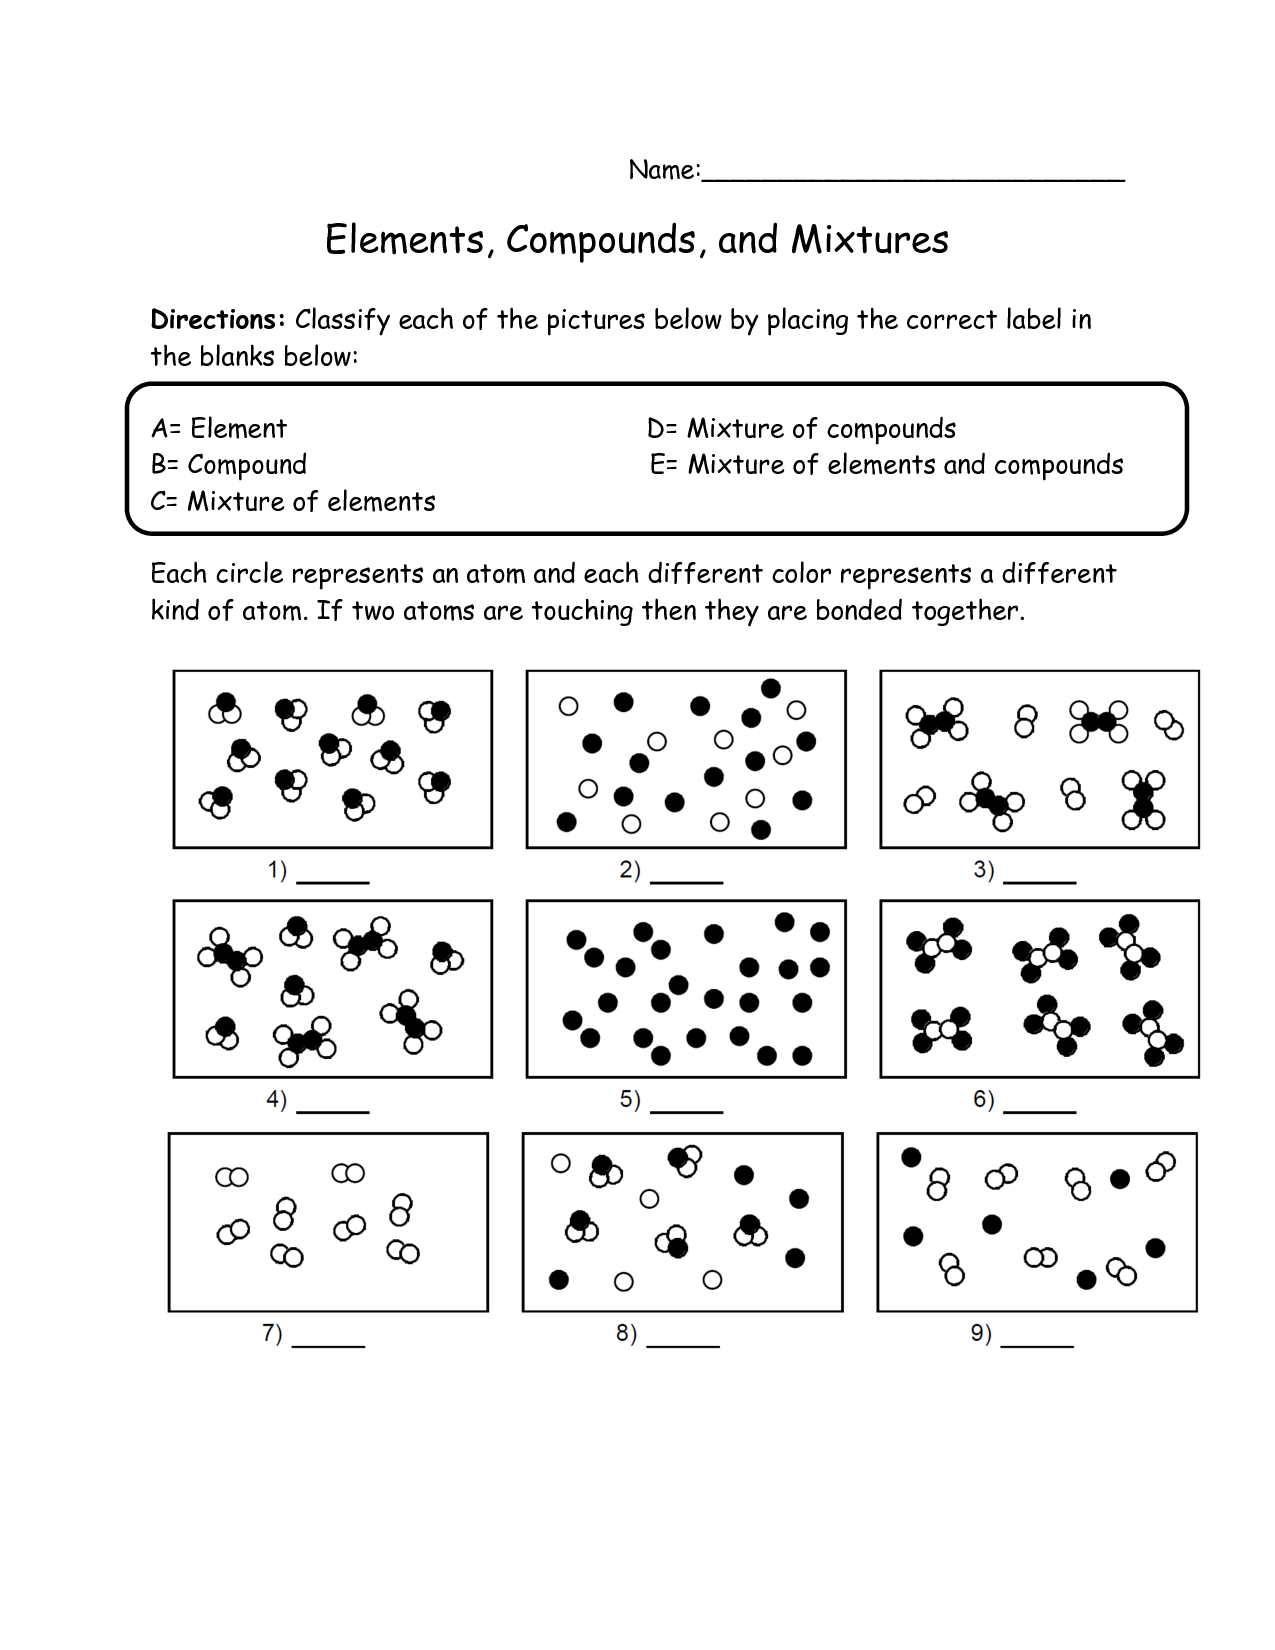 Elements Compounds and Mixtures Worksheet/ Crossword Puzzle by With Elements Compounds And Mixtures Worksheet